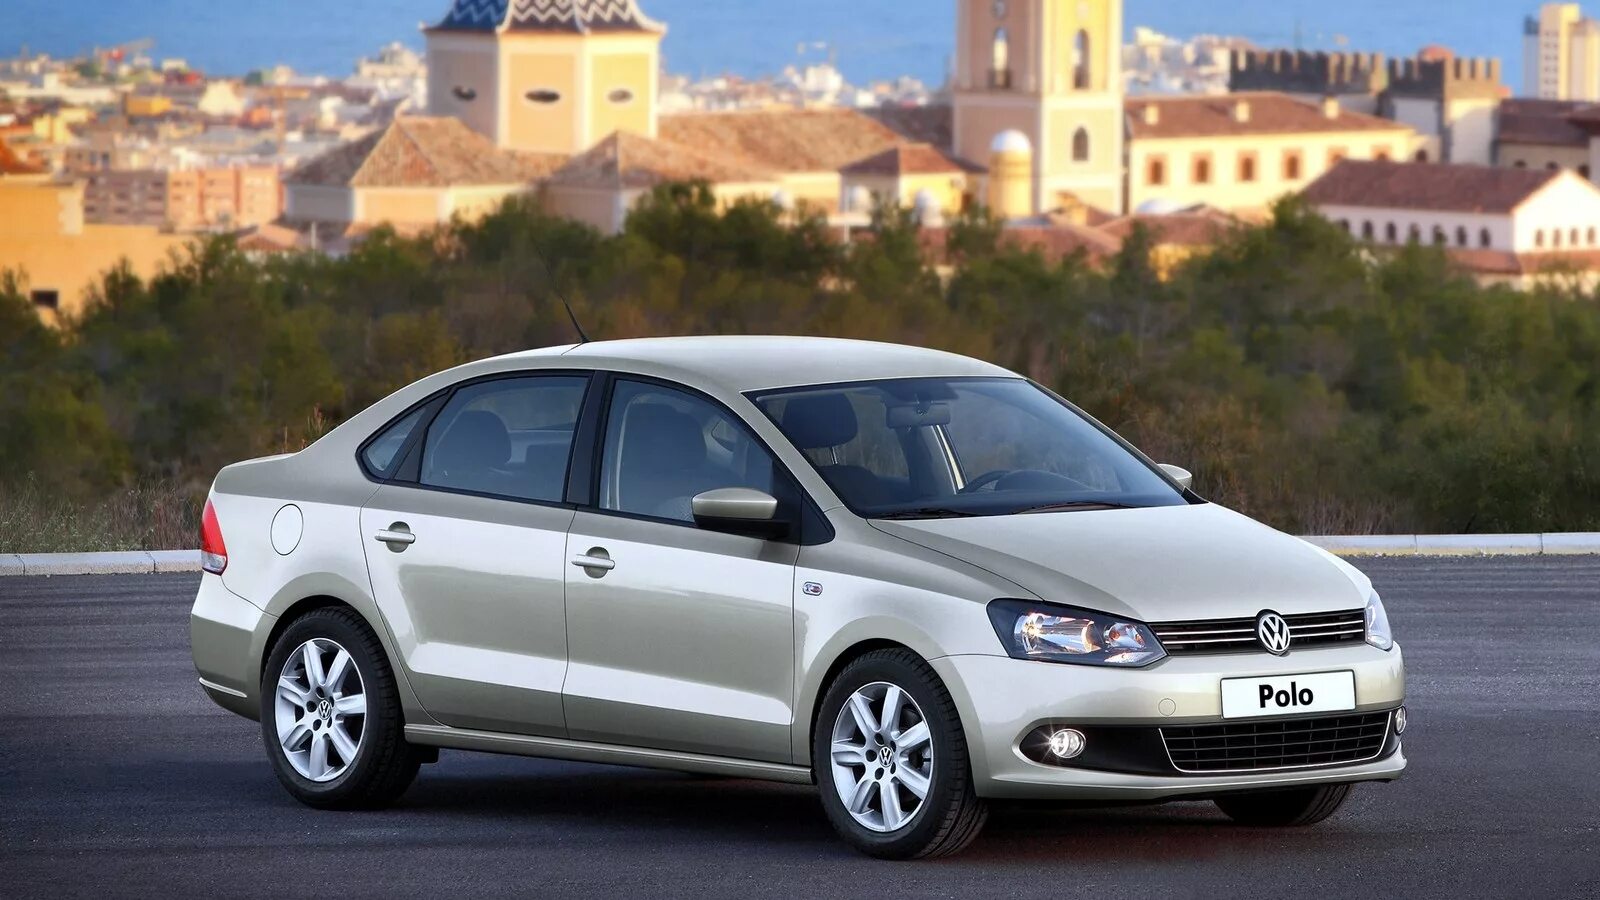 Wv polo sedan. Volkswagen Polo sedan. Volkswagen Polo sedan (2010). Фольксваген поло седан 2010. Volkswagen Polo 2010 седан.